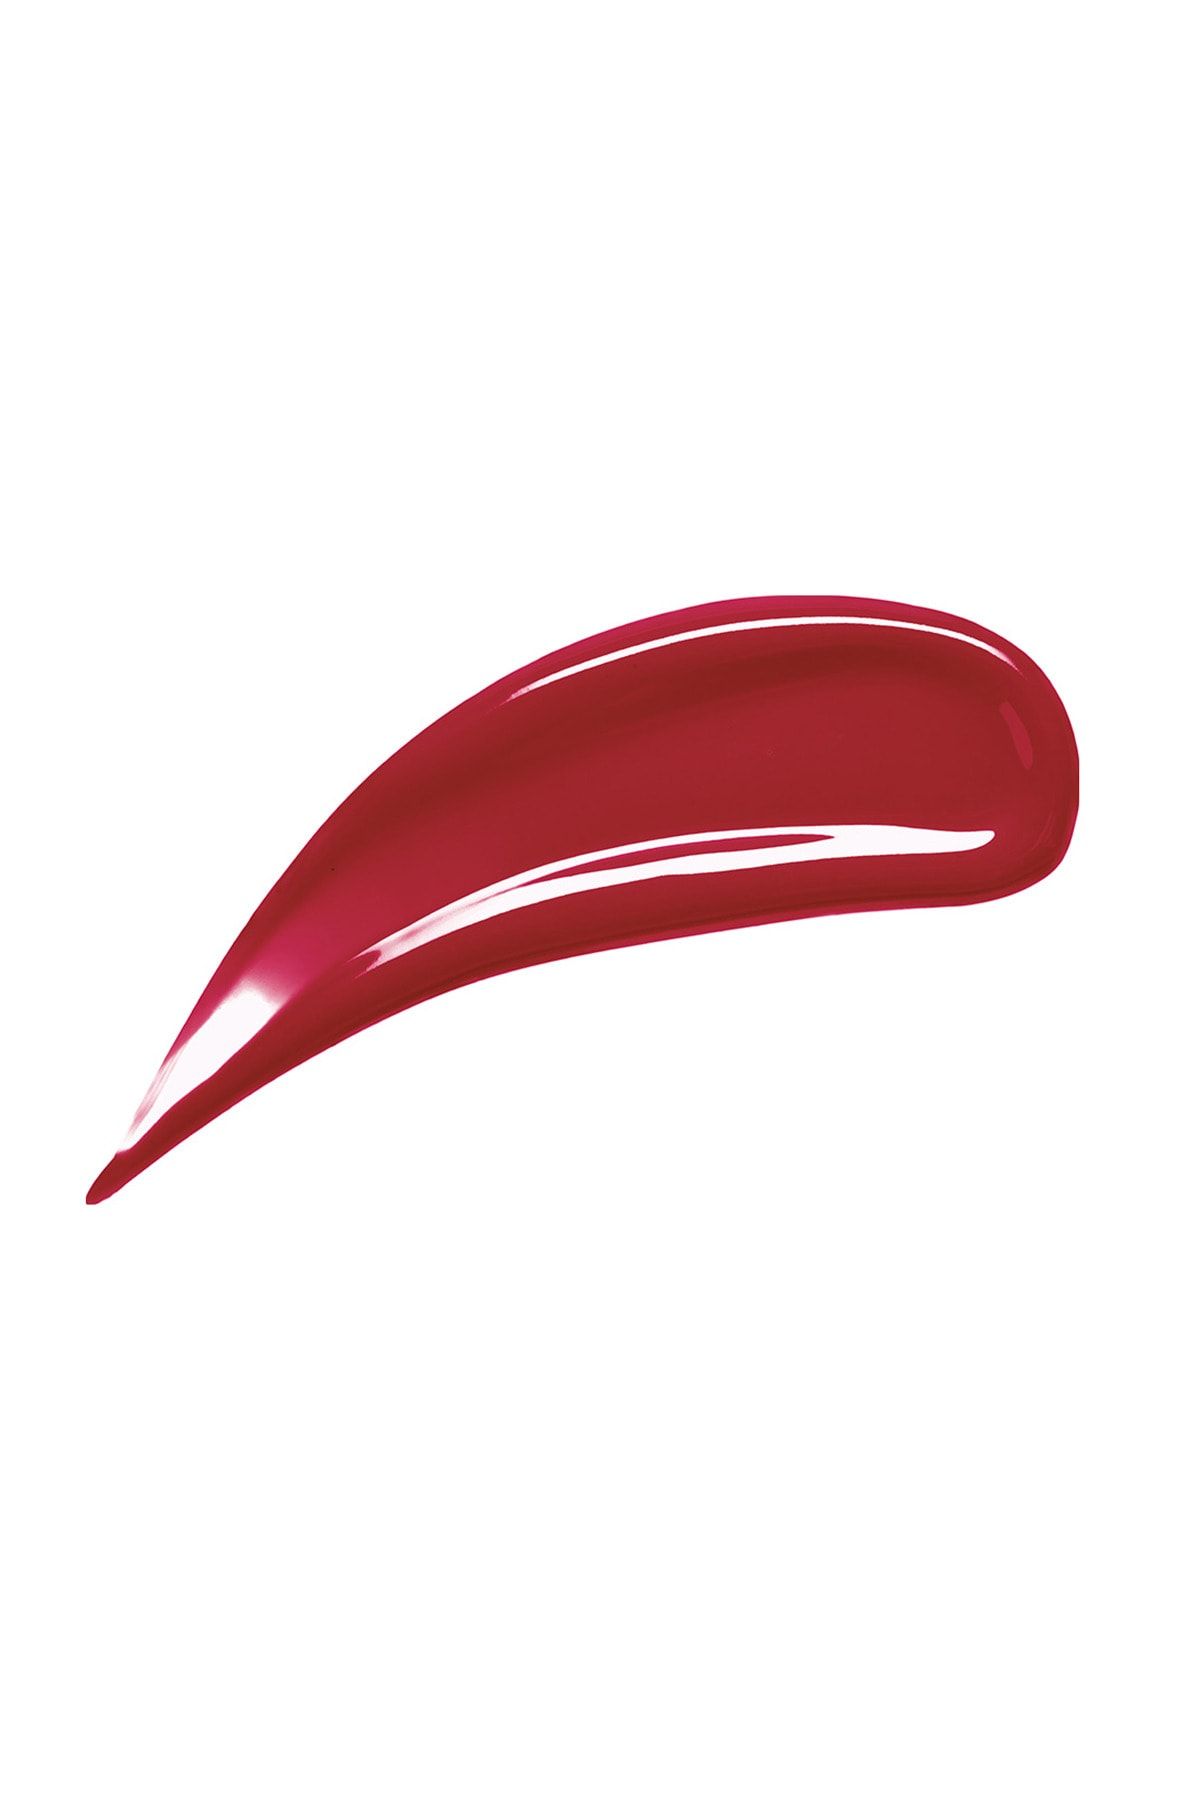 Yves Rocher لیپ گلاس رژ لب براق کننده شماره 07 رنگ قرمز